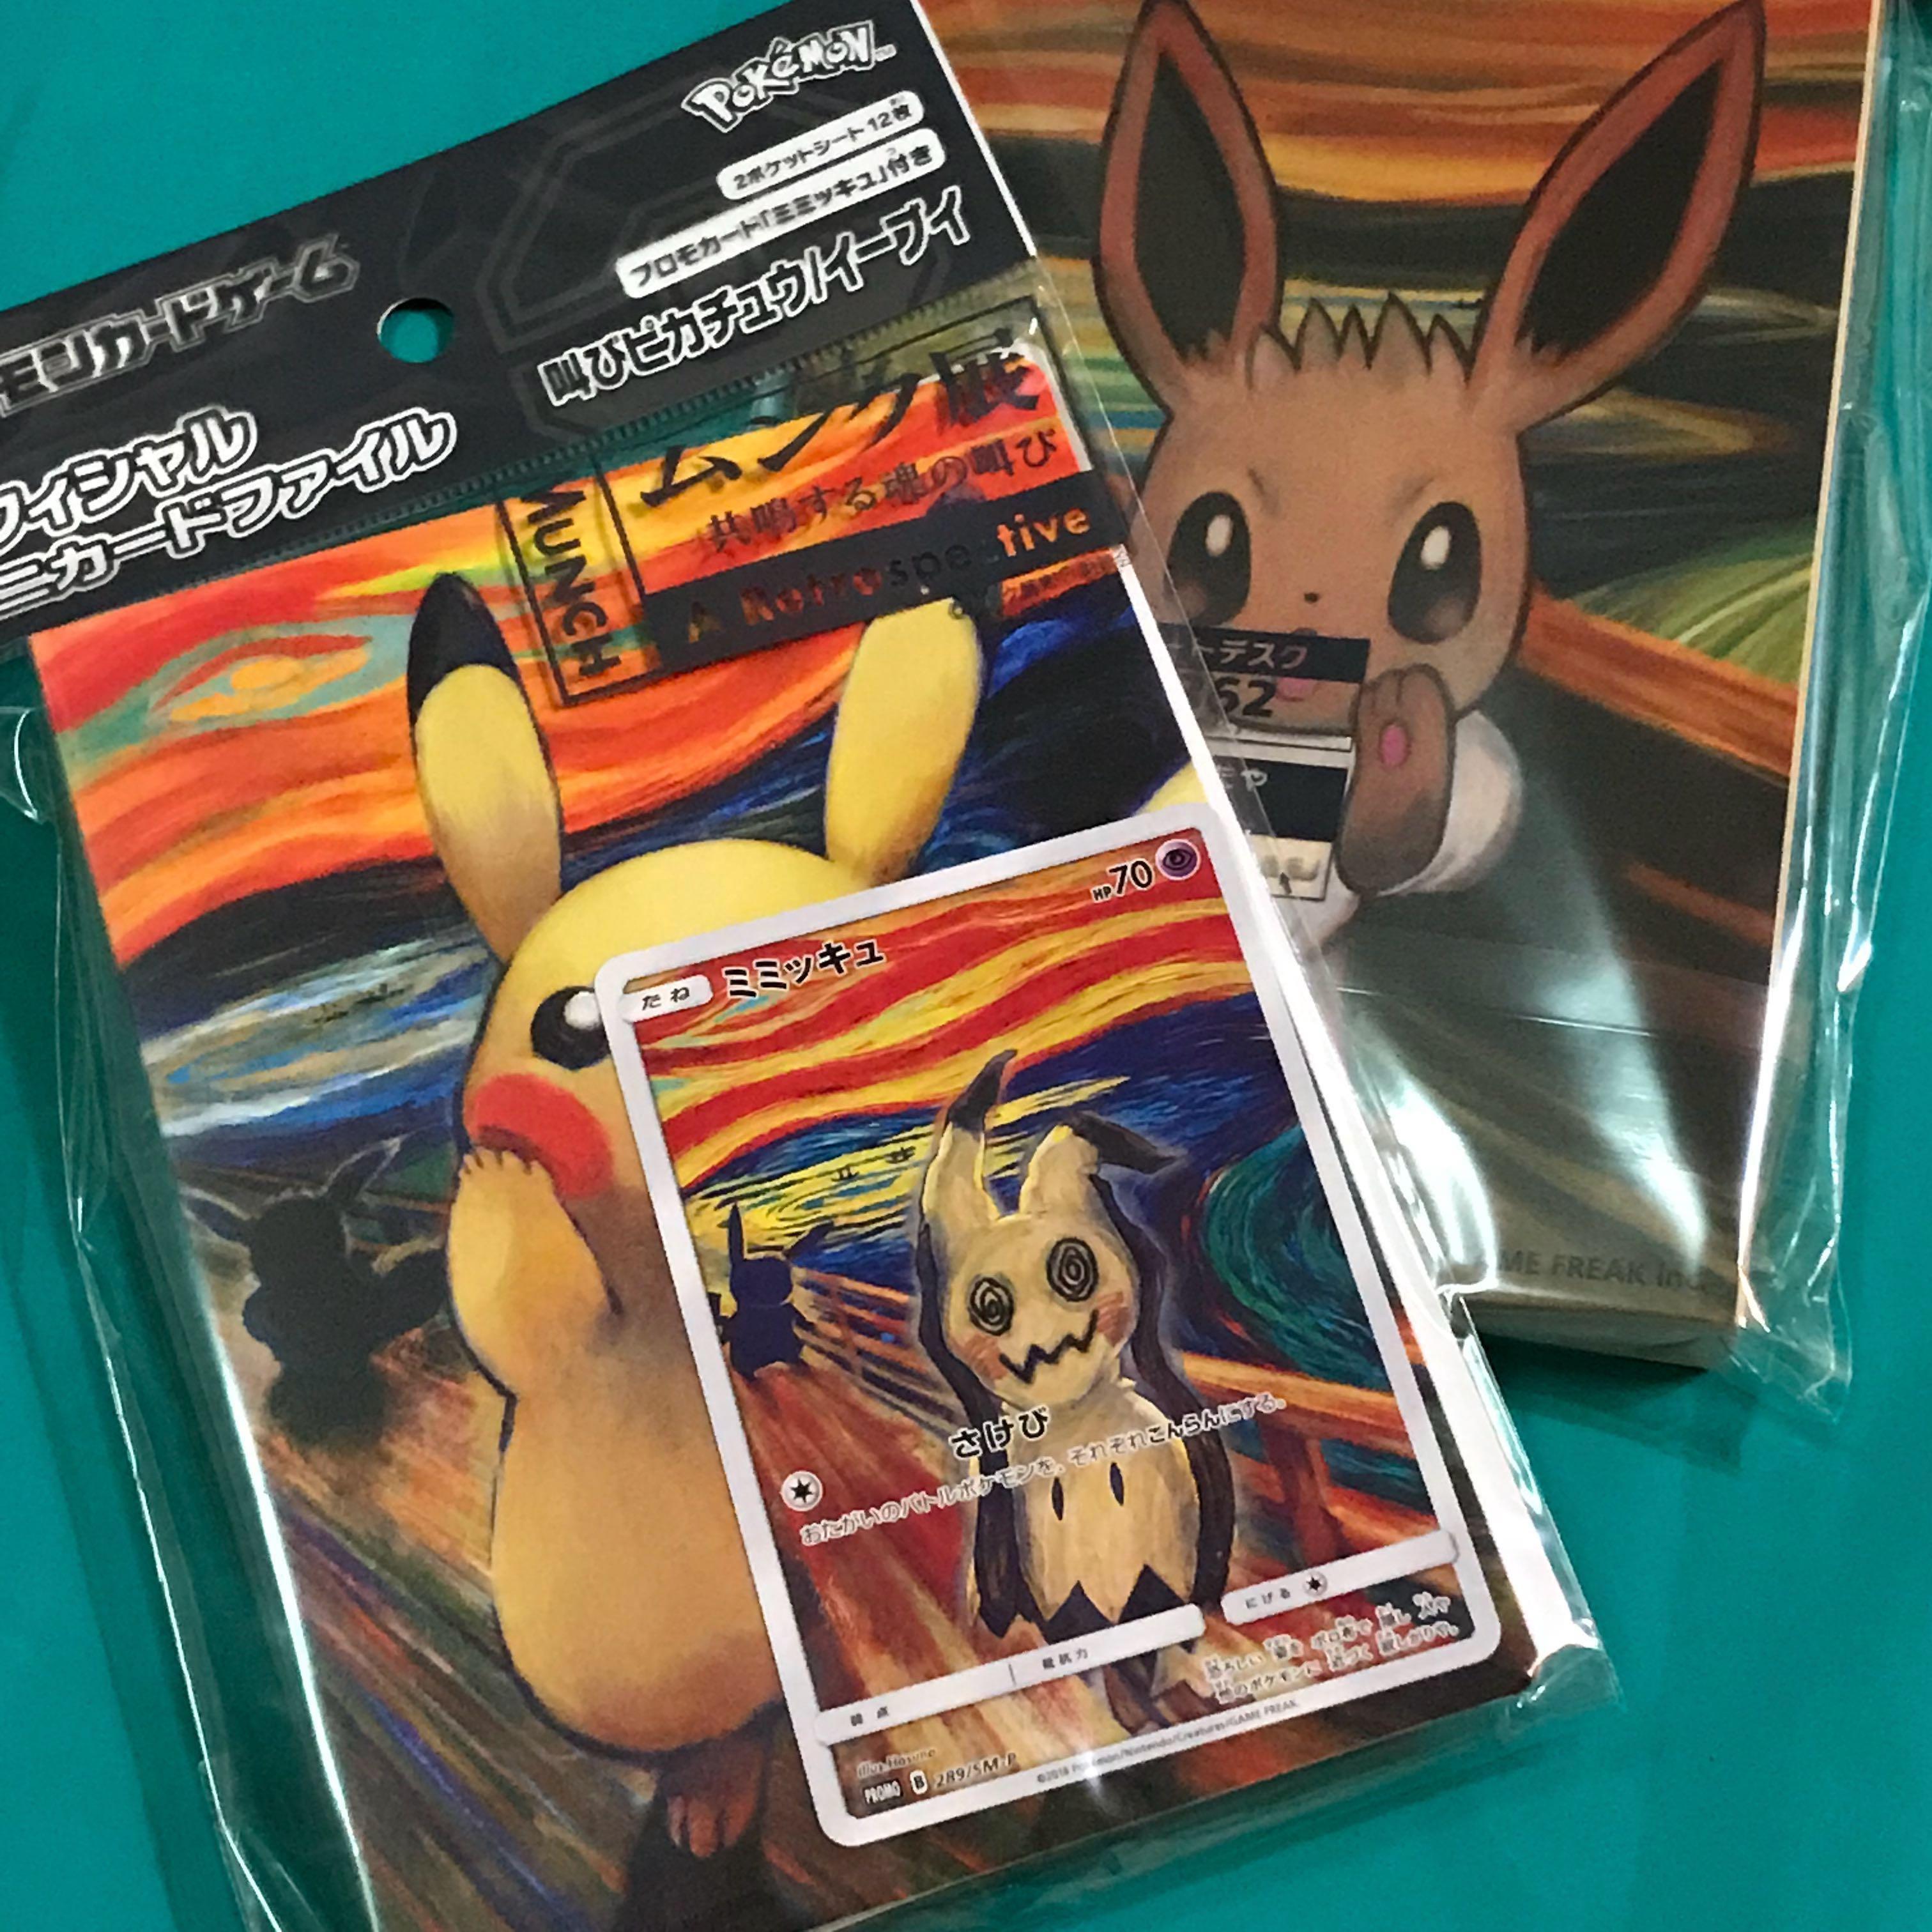 Pokémon, Yu-Gi-Oh! Trading Cards Riding High on Wave of Nostalgia